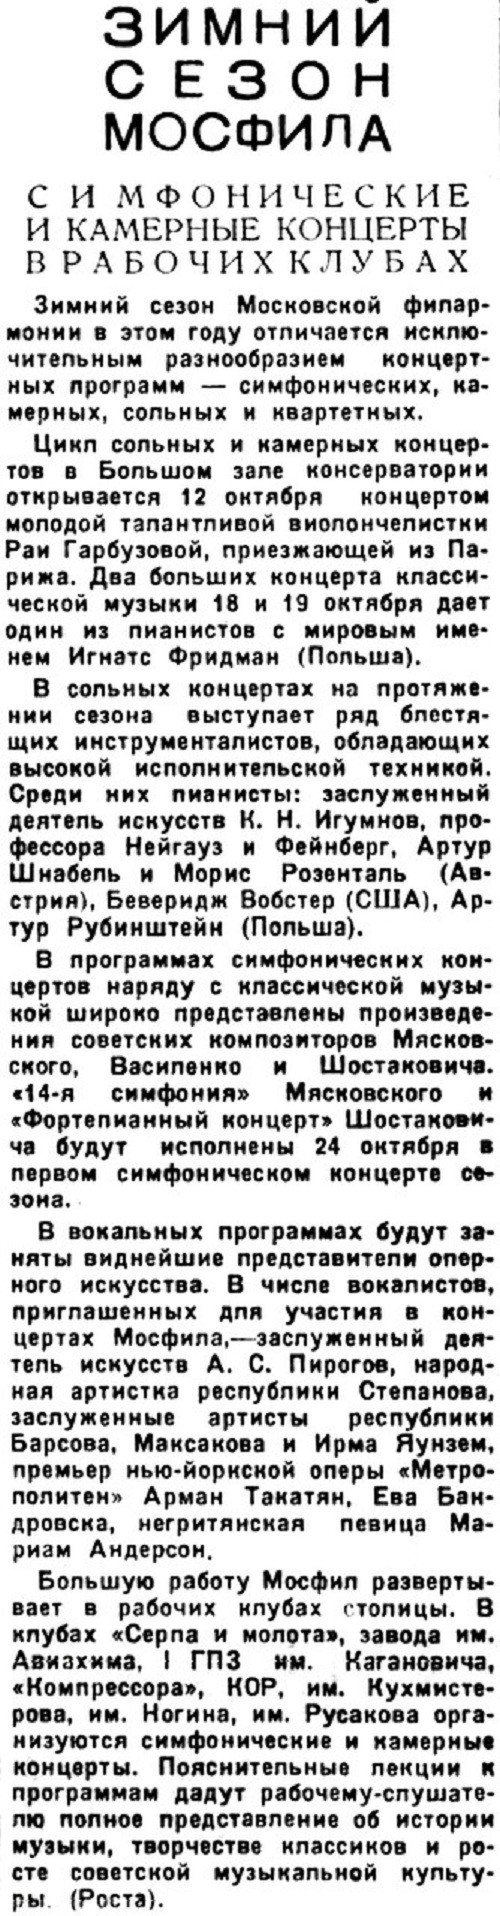 «Литературная газета», 8 октября 1934 г.